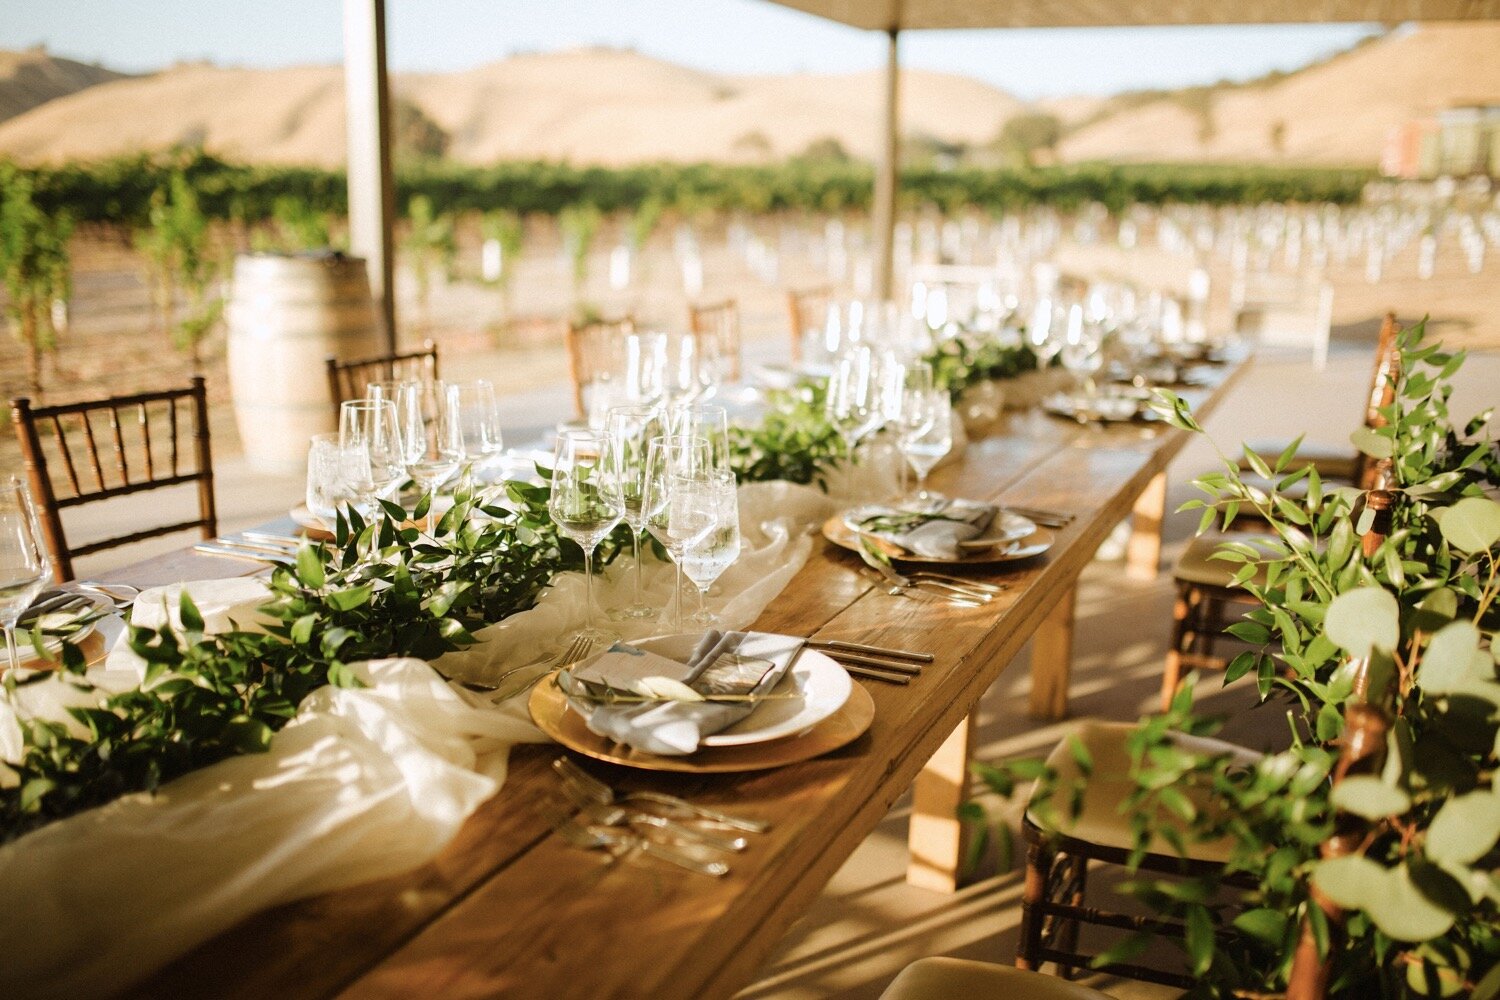 Rustic vineyard farmhouse table settings at Cass Winery wedding. SLO Wedding Photographers